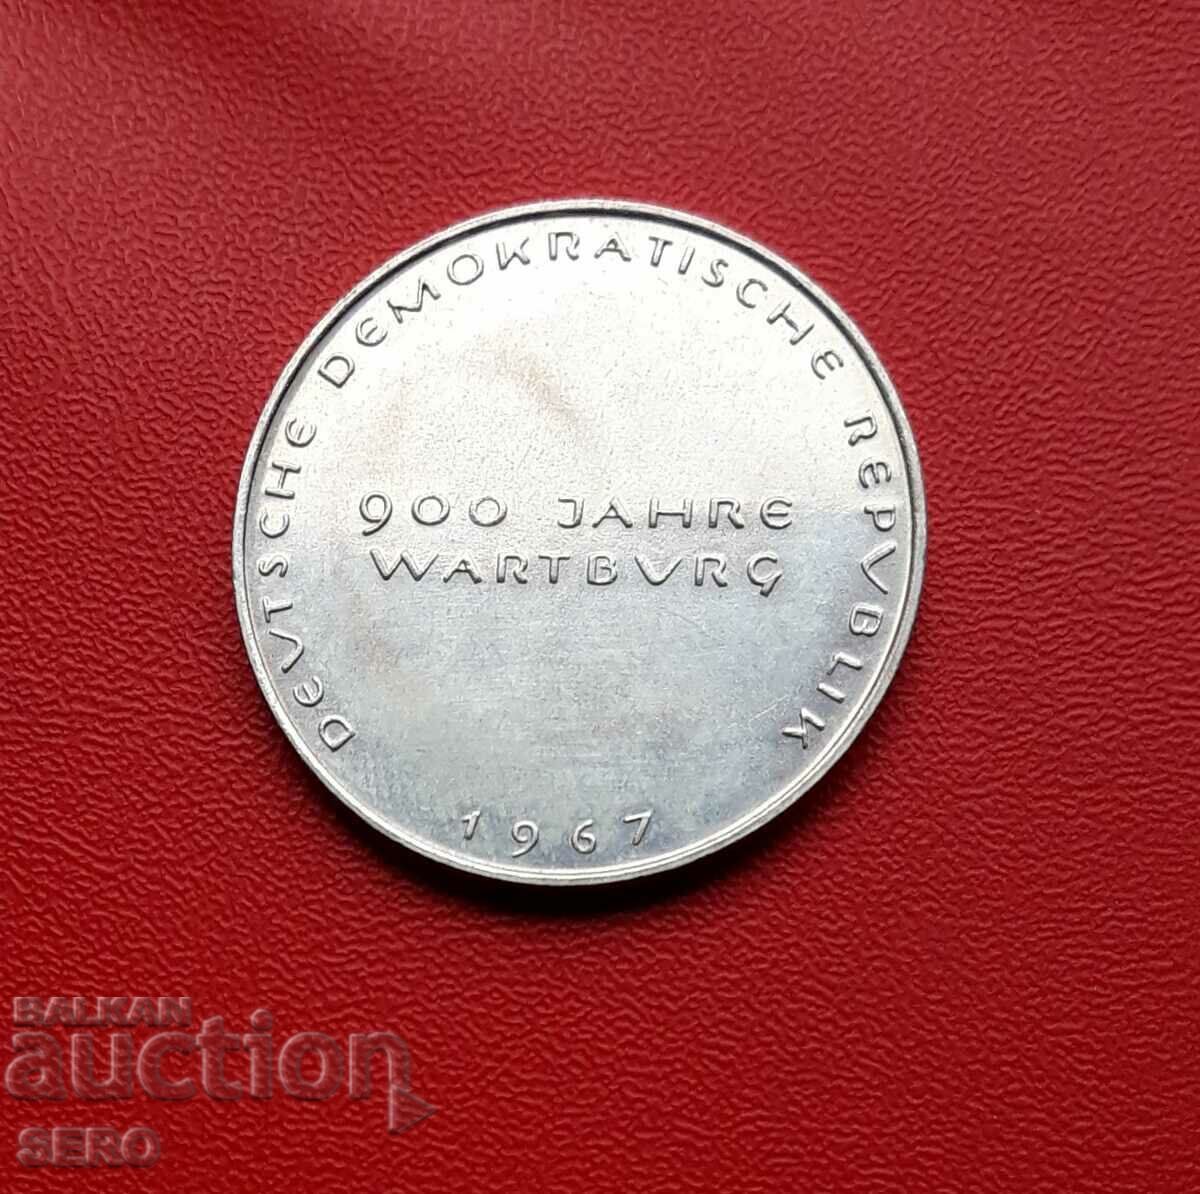 Германия-ГДР-медал 1967-900 год. замъкът Вартбург 1067-1967